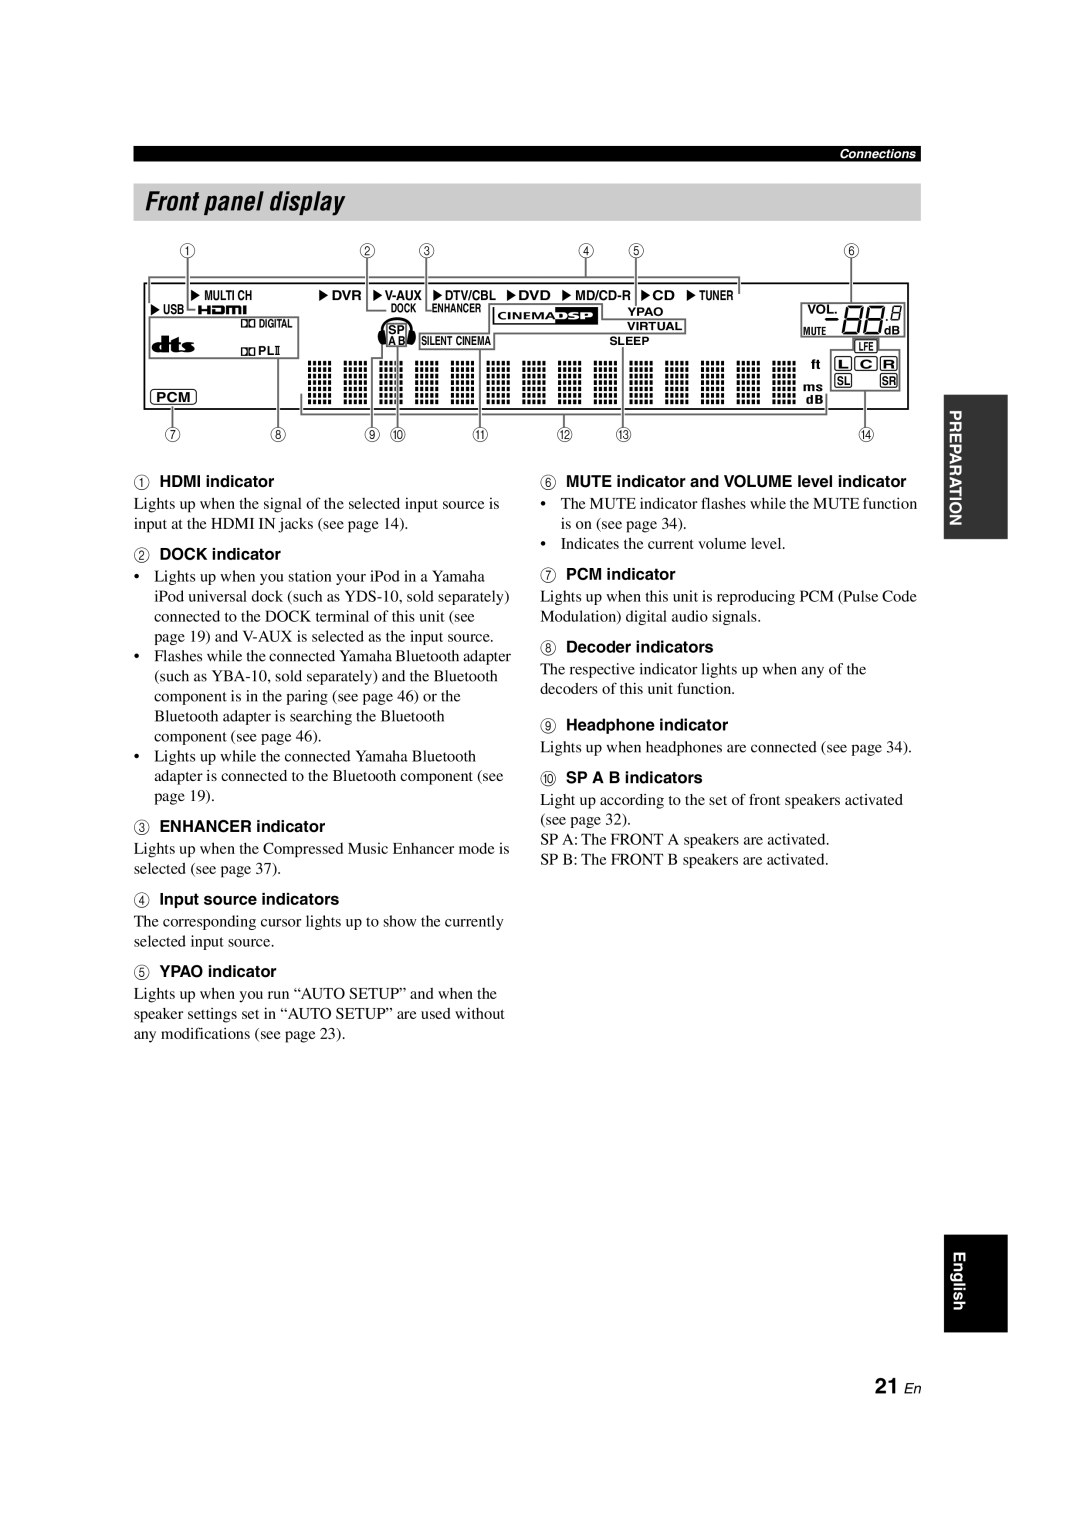 Yamaha DSP-AX463 Front panel display, 21 En, 1HDMI indicator, 2DOCK indicator, 3ENHANCER indicator, 5YPAO indicator 